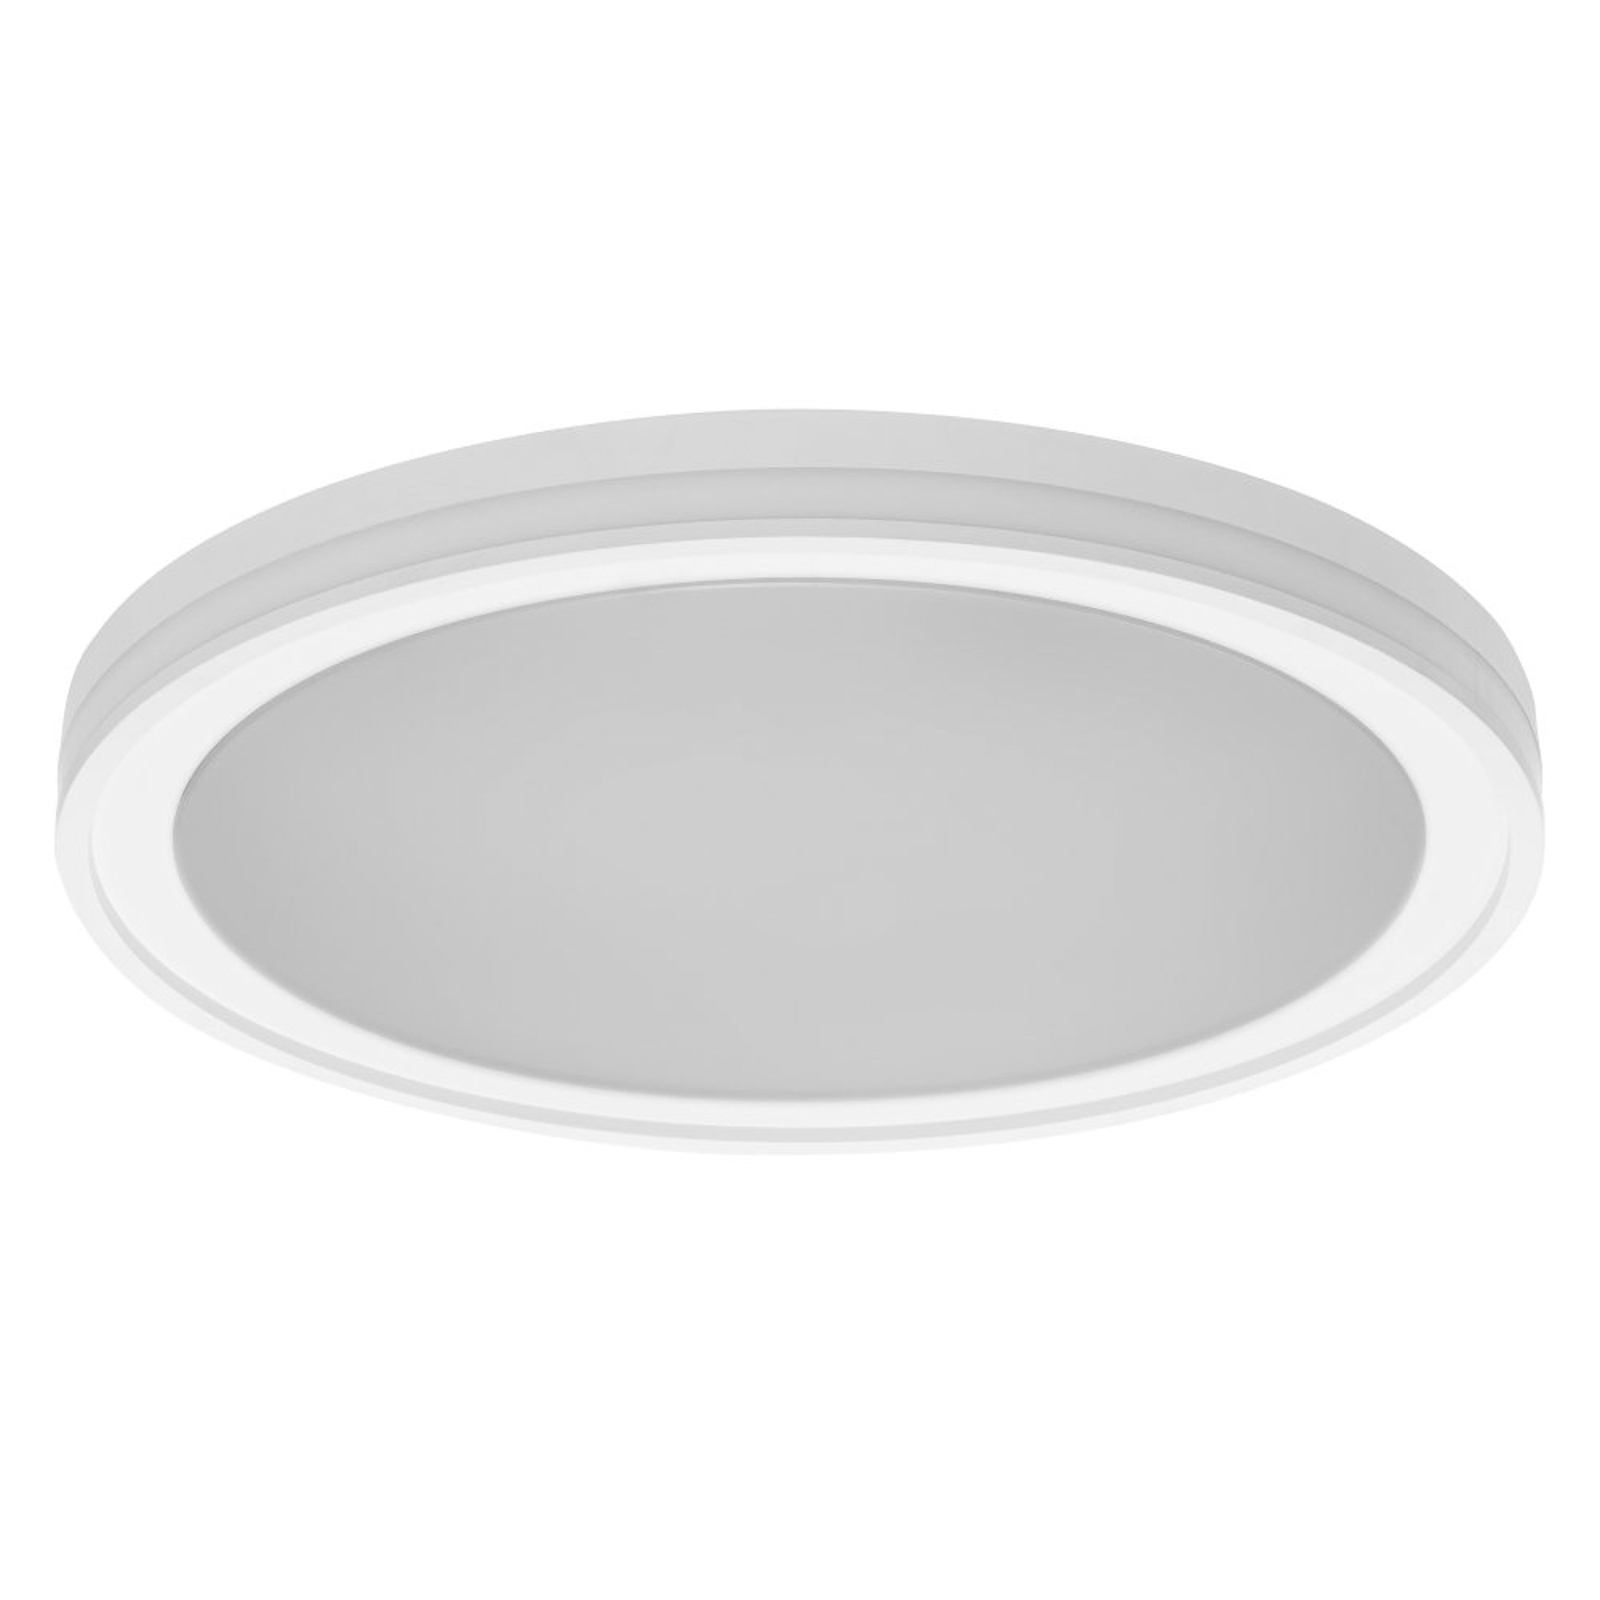 LEDVANCE SMART+ WiFi Orbis Circle CCT RGB blanco